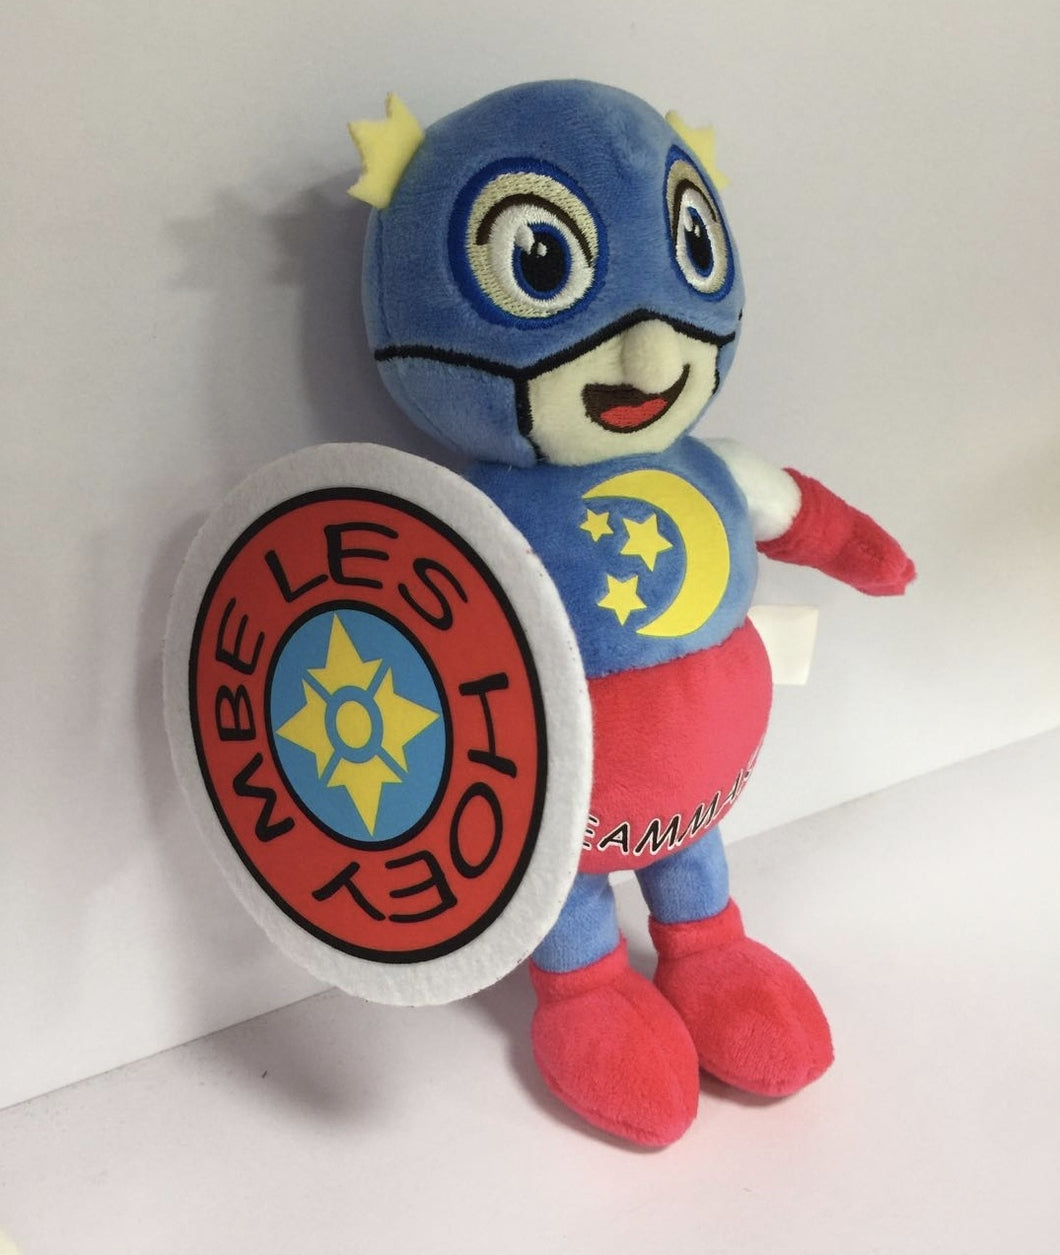 Mr Wiz Charity Mascot Plush Toy